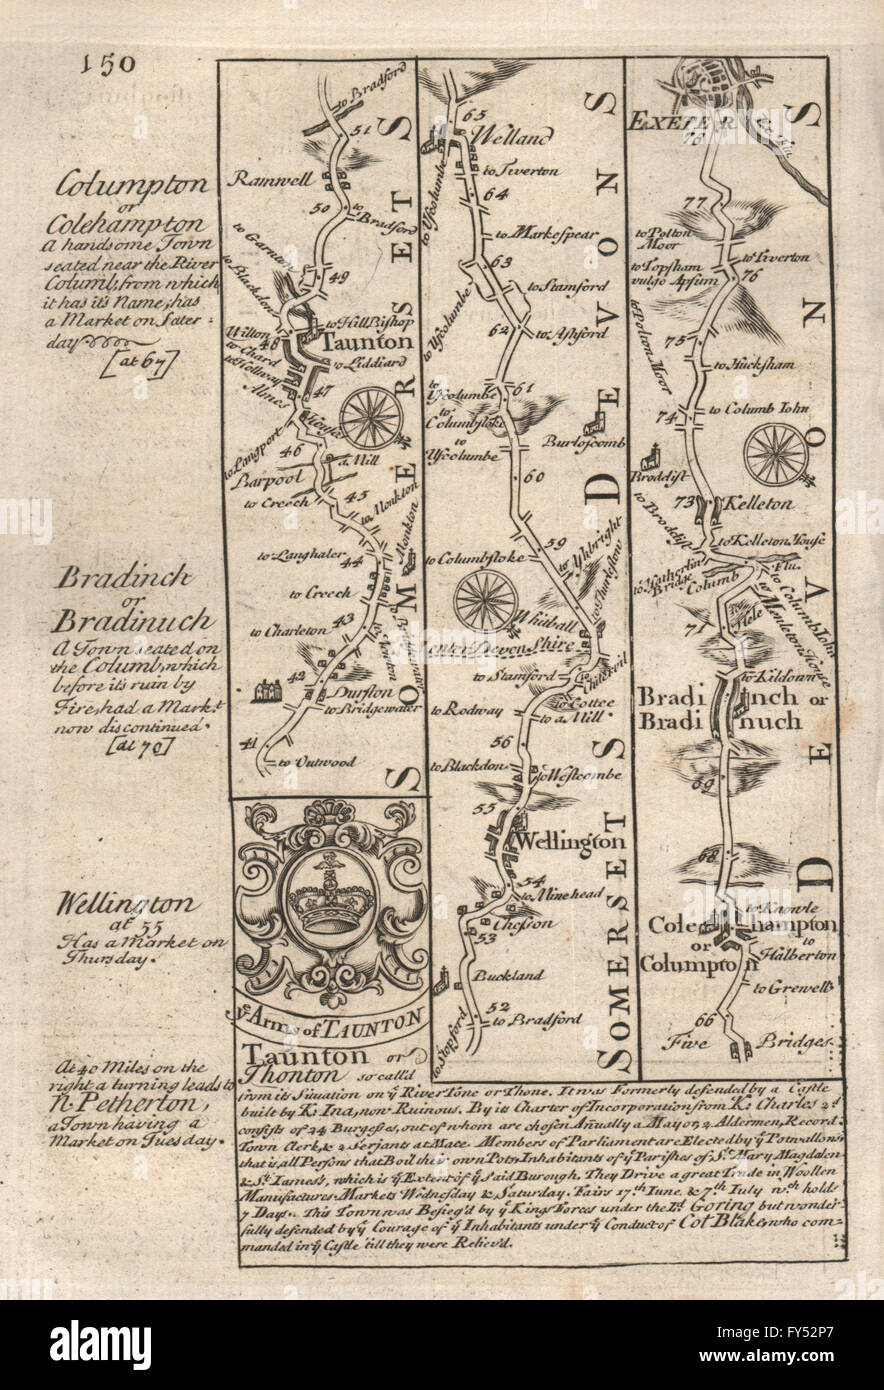 Guildford-Godalming-Chiddingfold-Midhurst-Chichester OWEN/BOWEN road map 1753 